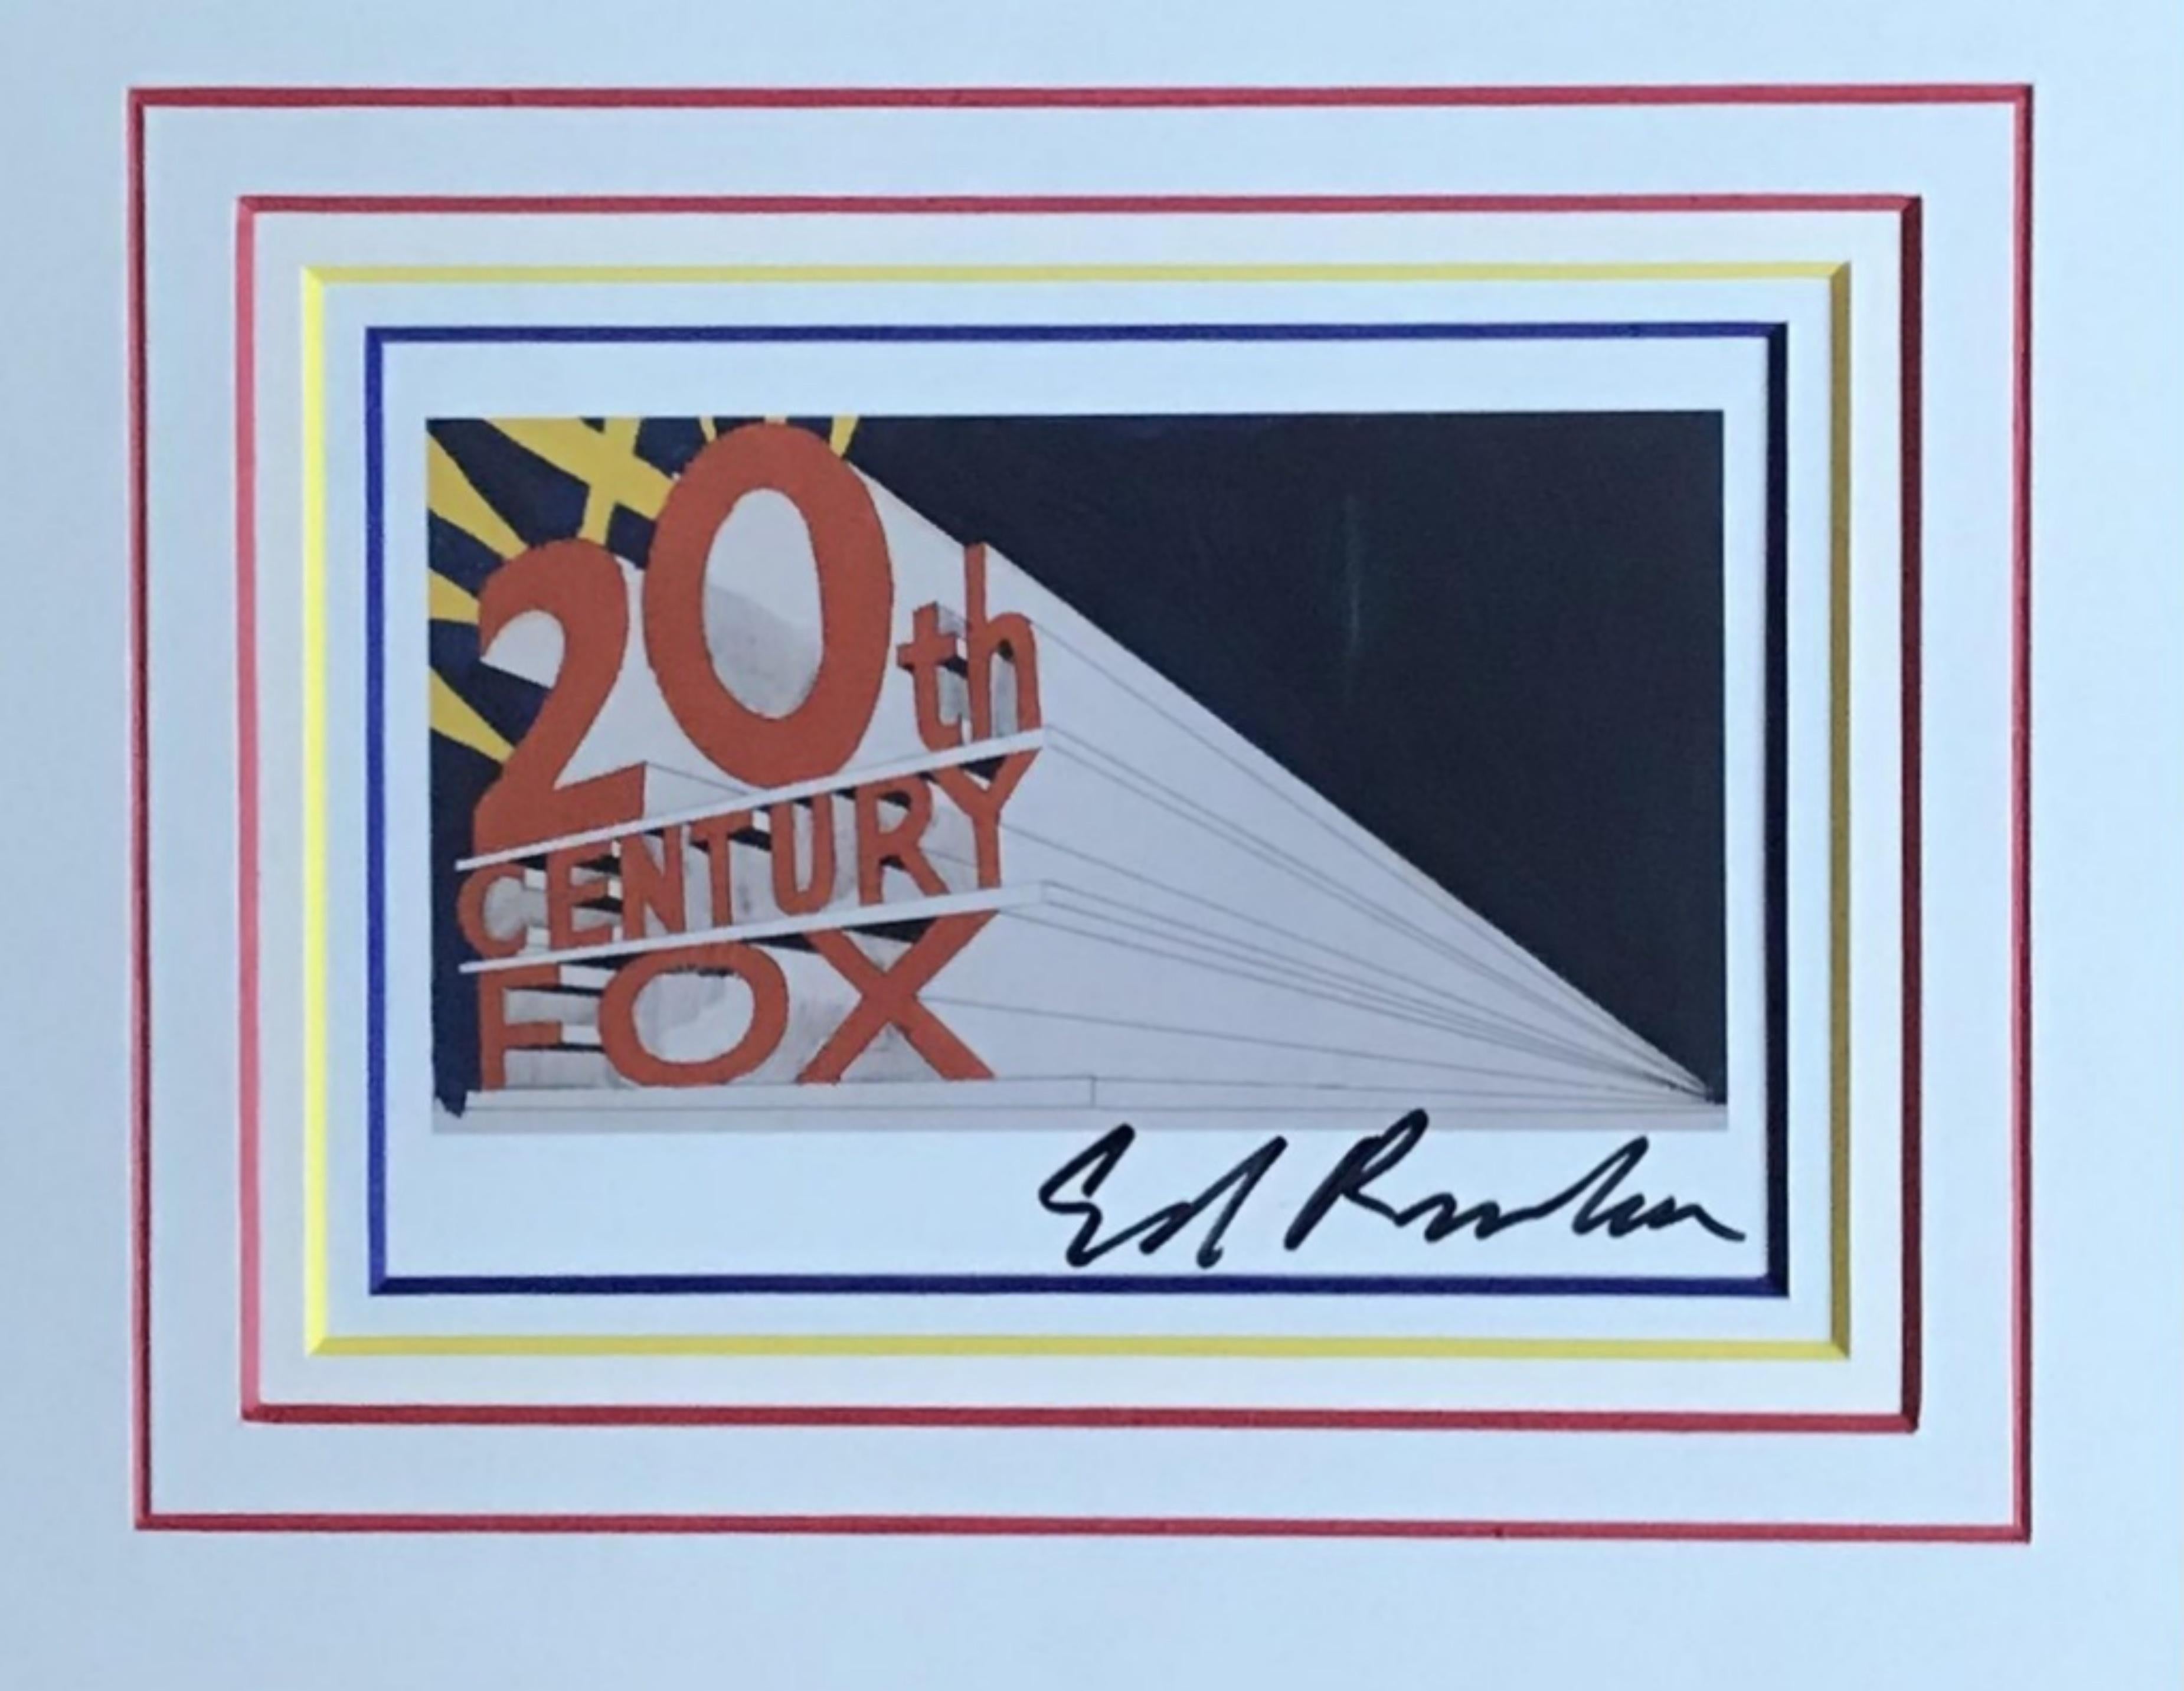 Abstract Print Ed Ruscha - 20th Century Fox (signé à la main) carte lithographique offset 